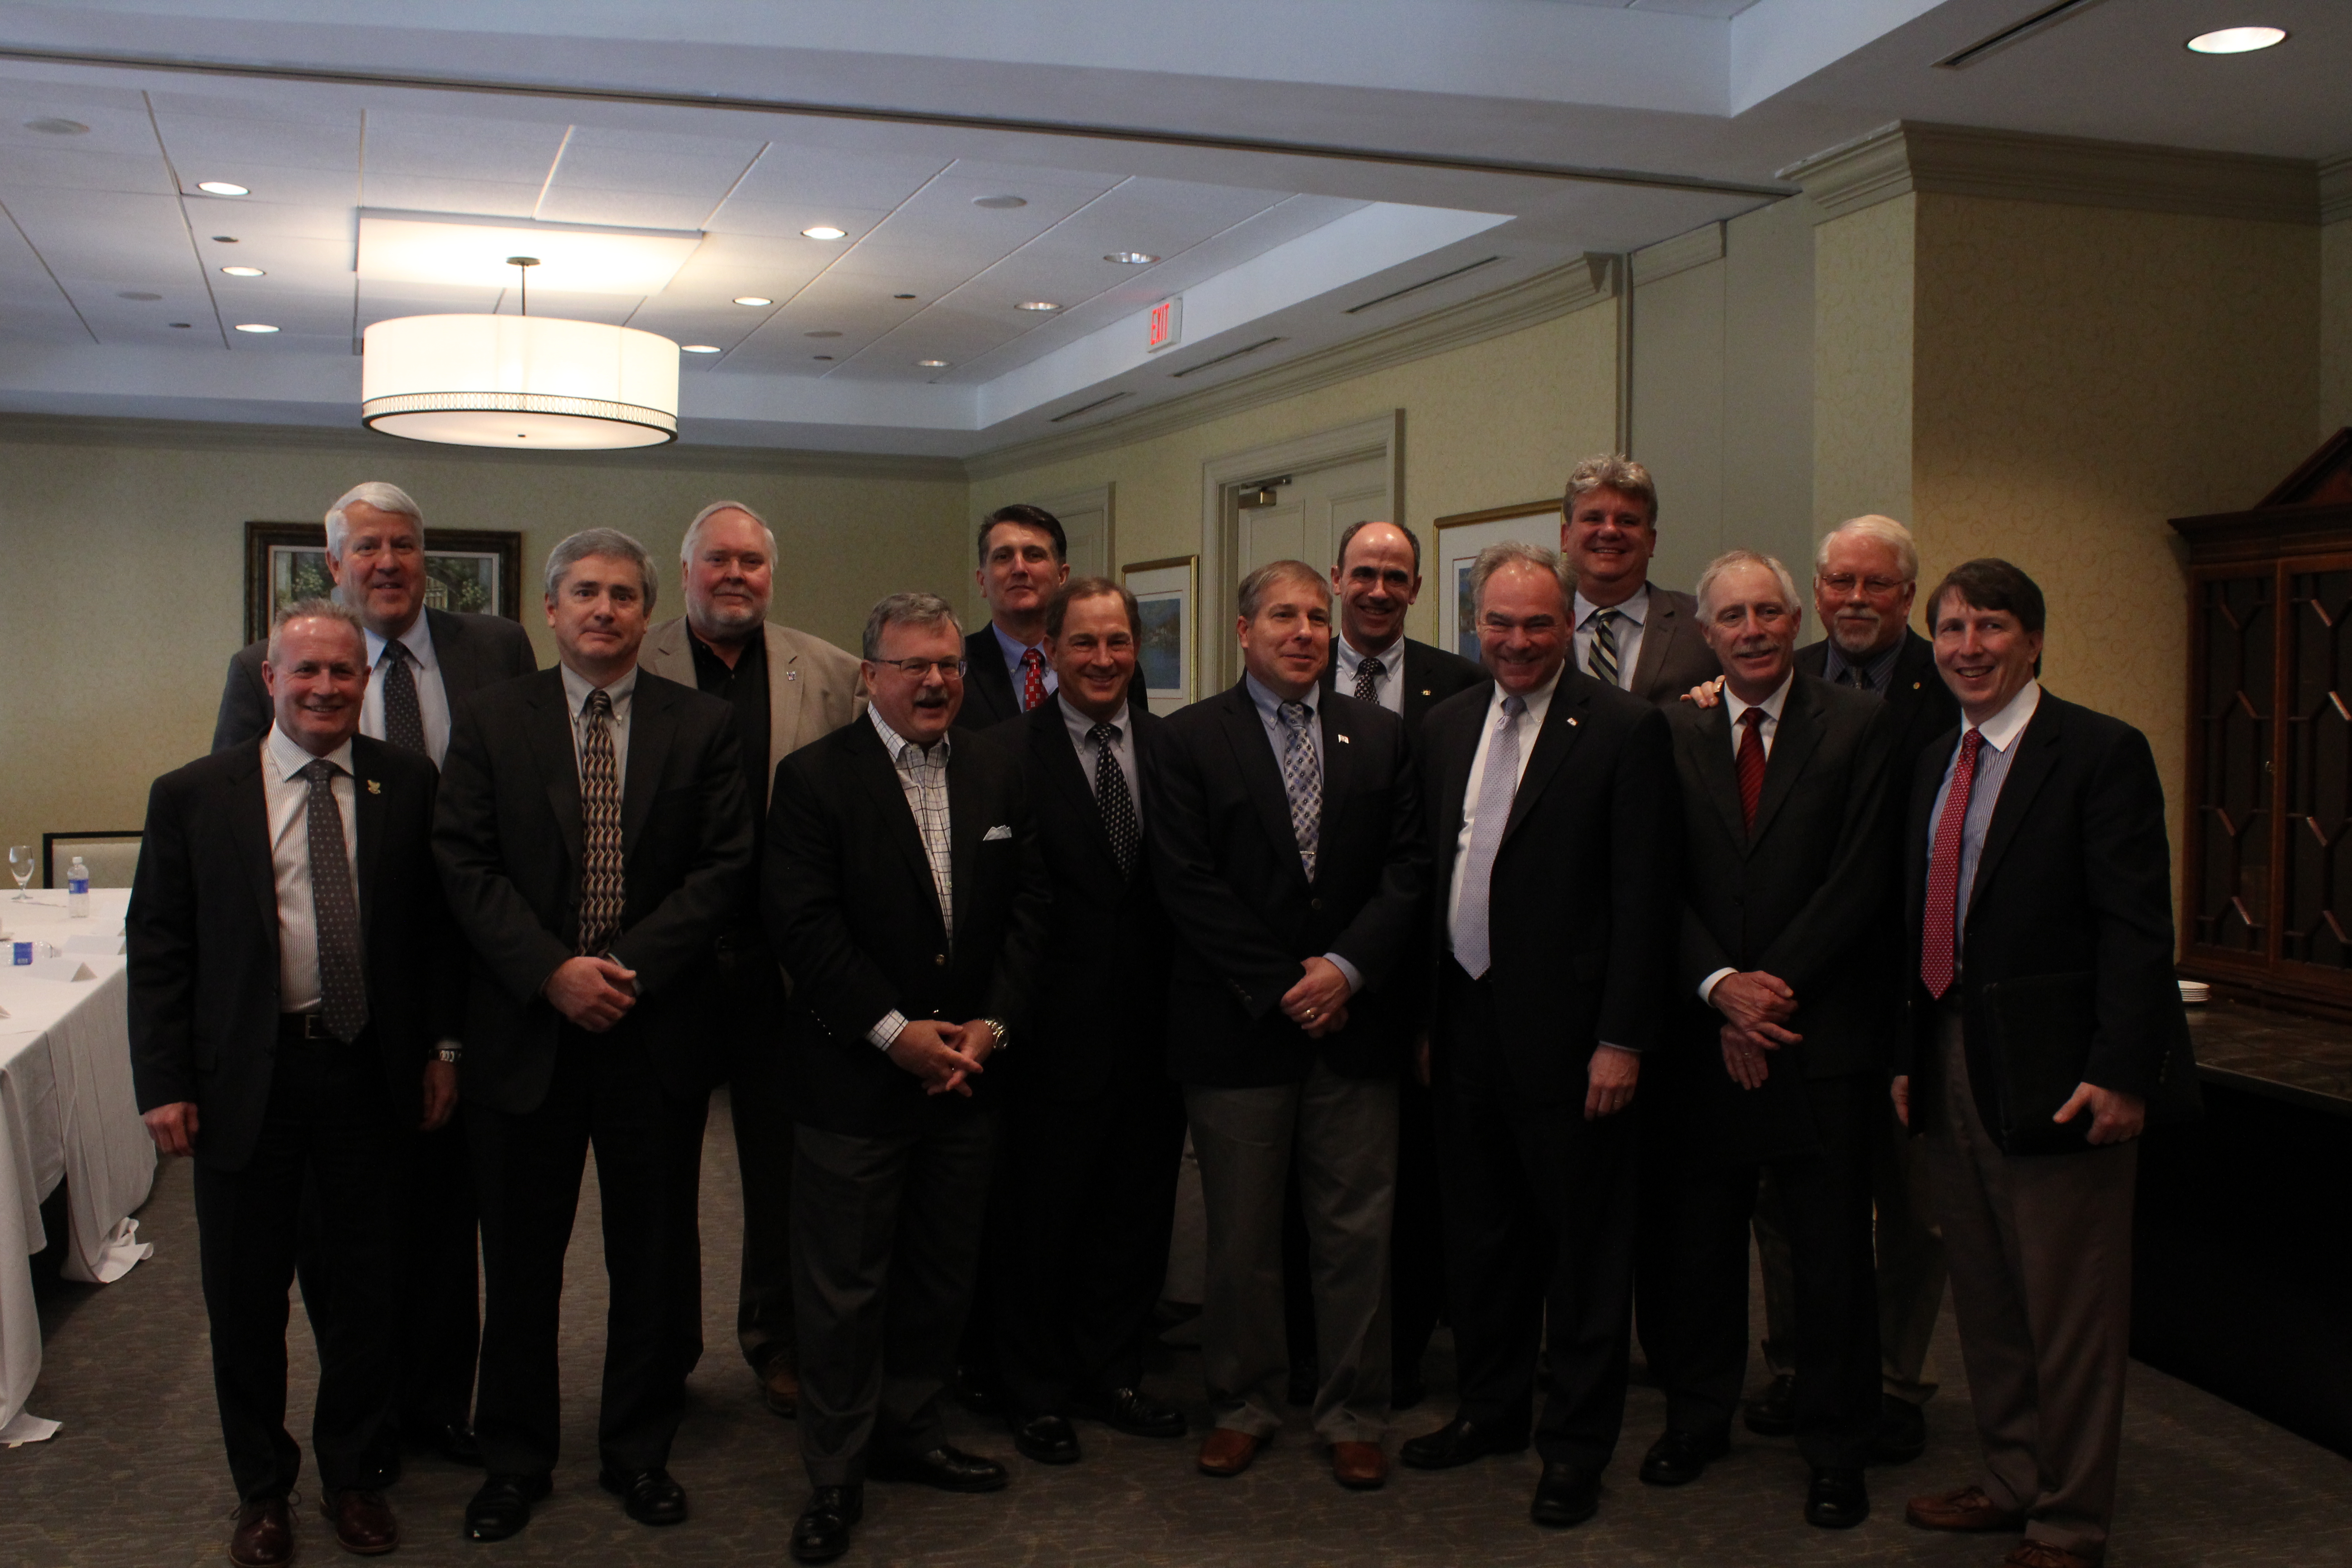 Senator Tim Kaine with the VSRA Board of Directors